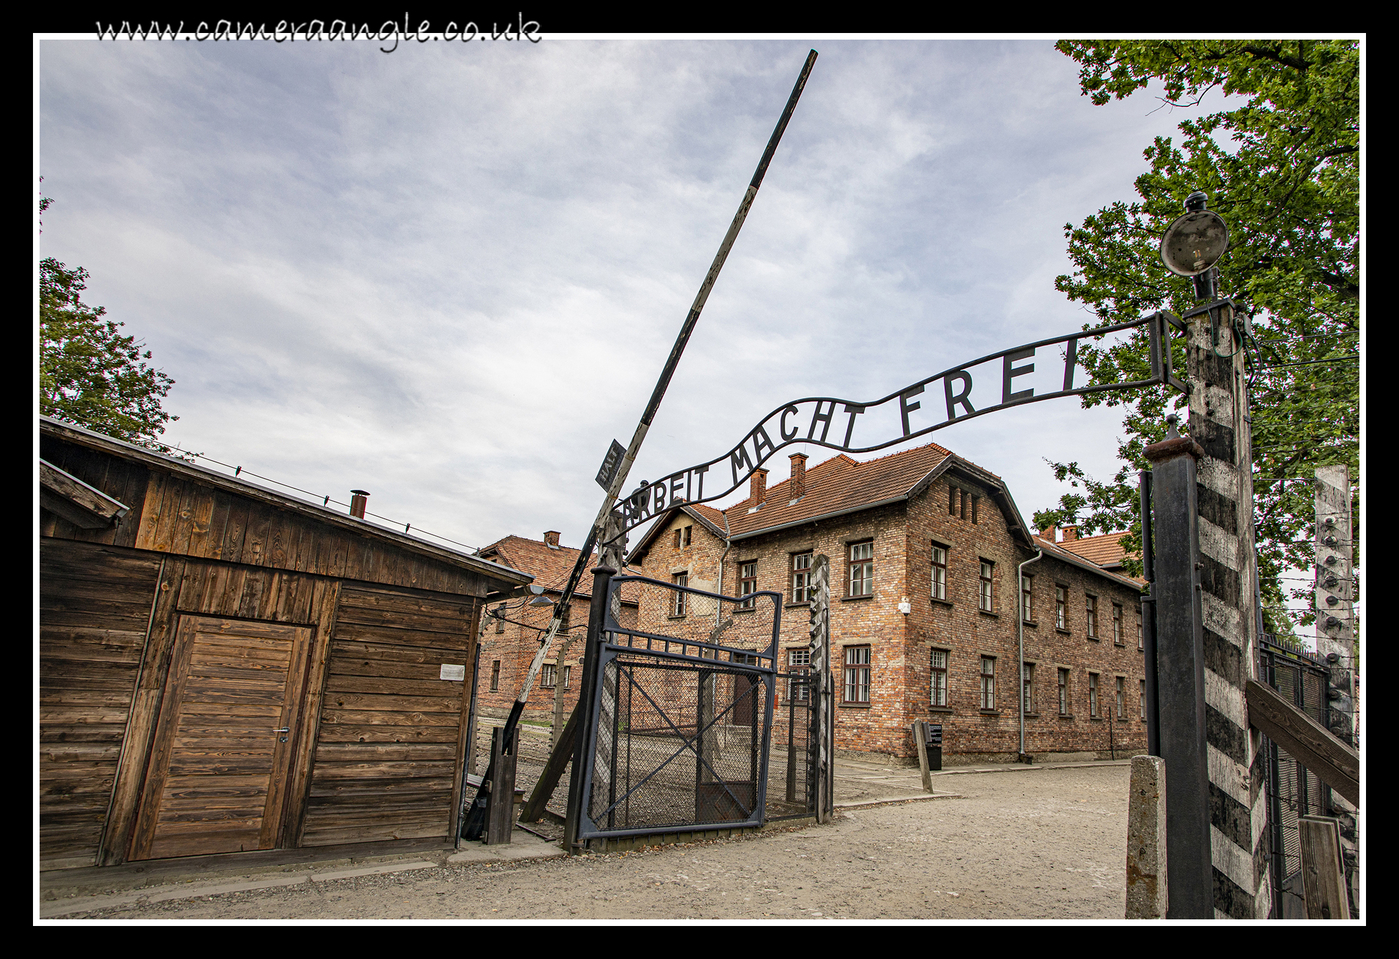 Auschwitz Entrance
Arbeit Mach Frei - "work sets you free"
Keywords: Auschwitz Entrance Gate 2019 Krakow